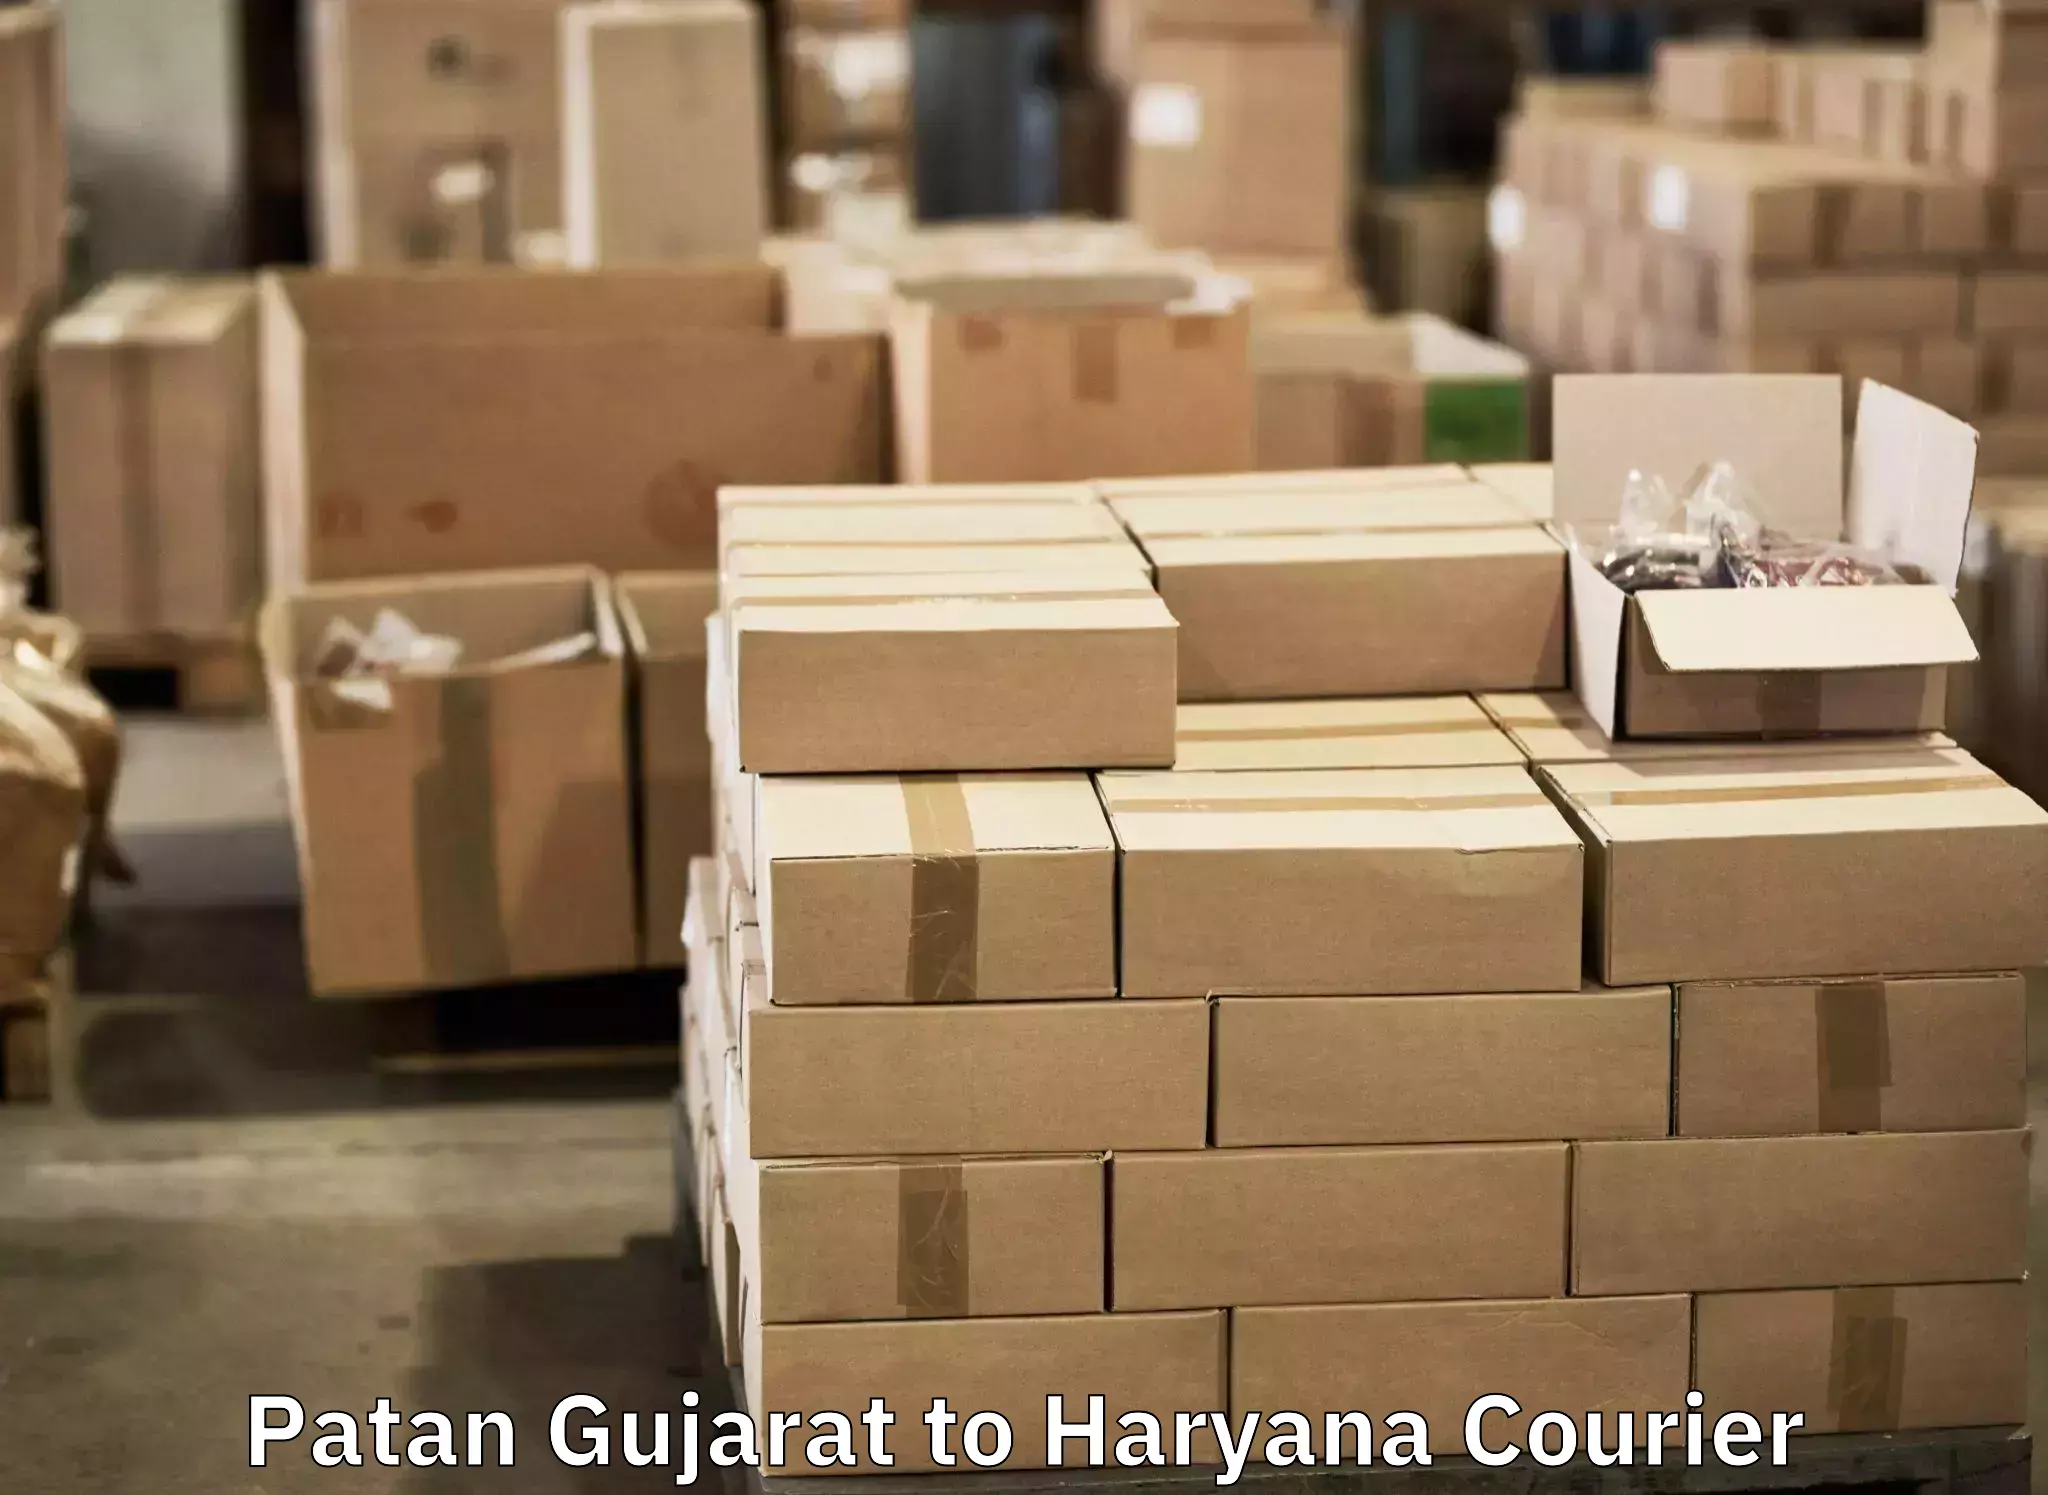 Same day luggage service Patan Gujarat to Rohtak